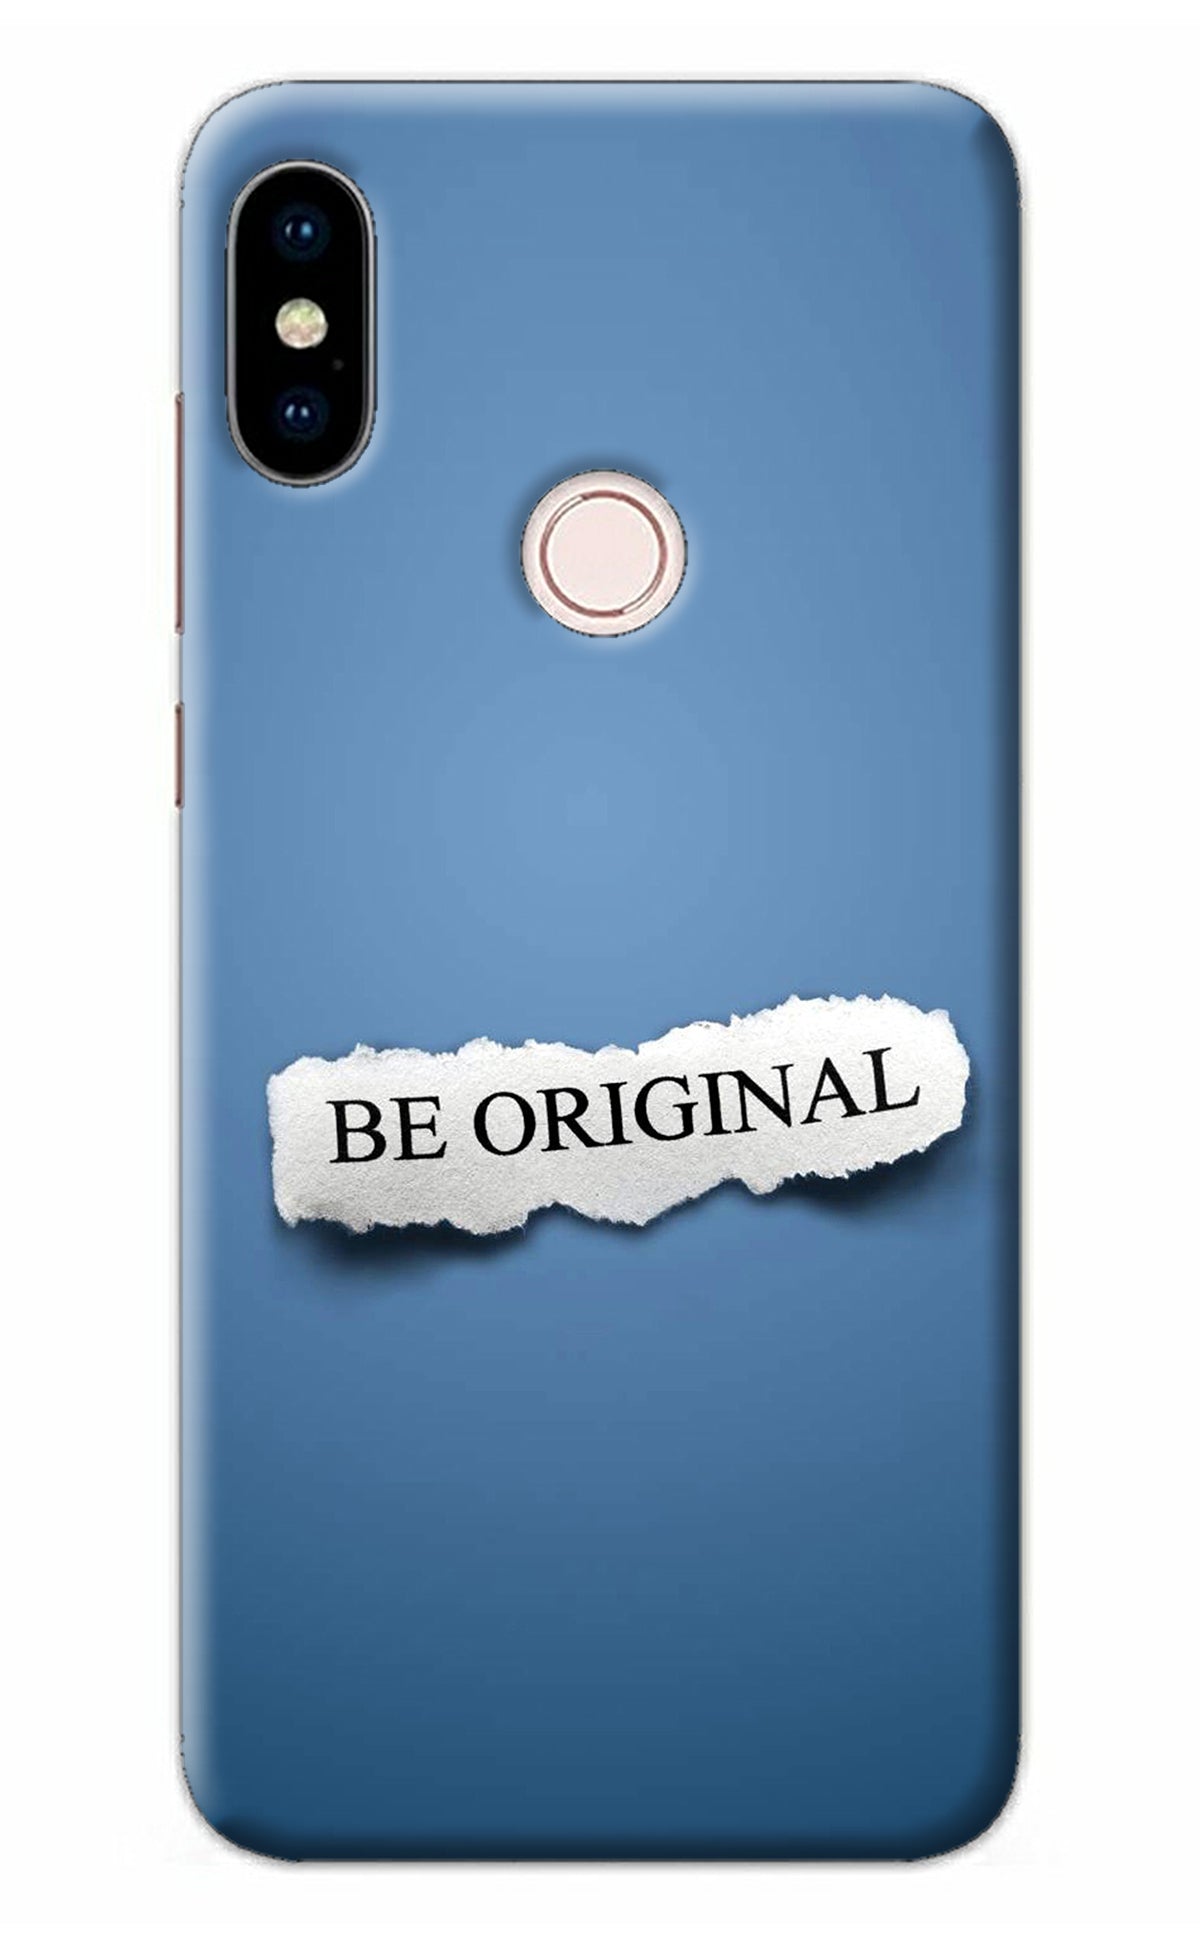 Be Original Redmi Note 5 Pro Back Cover